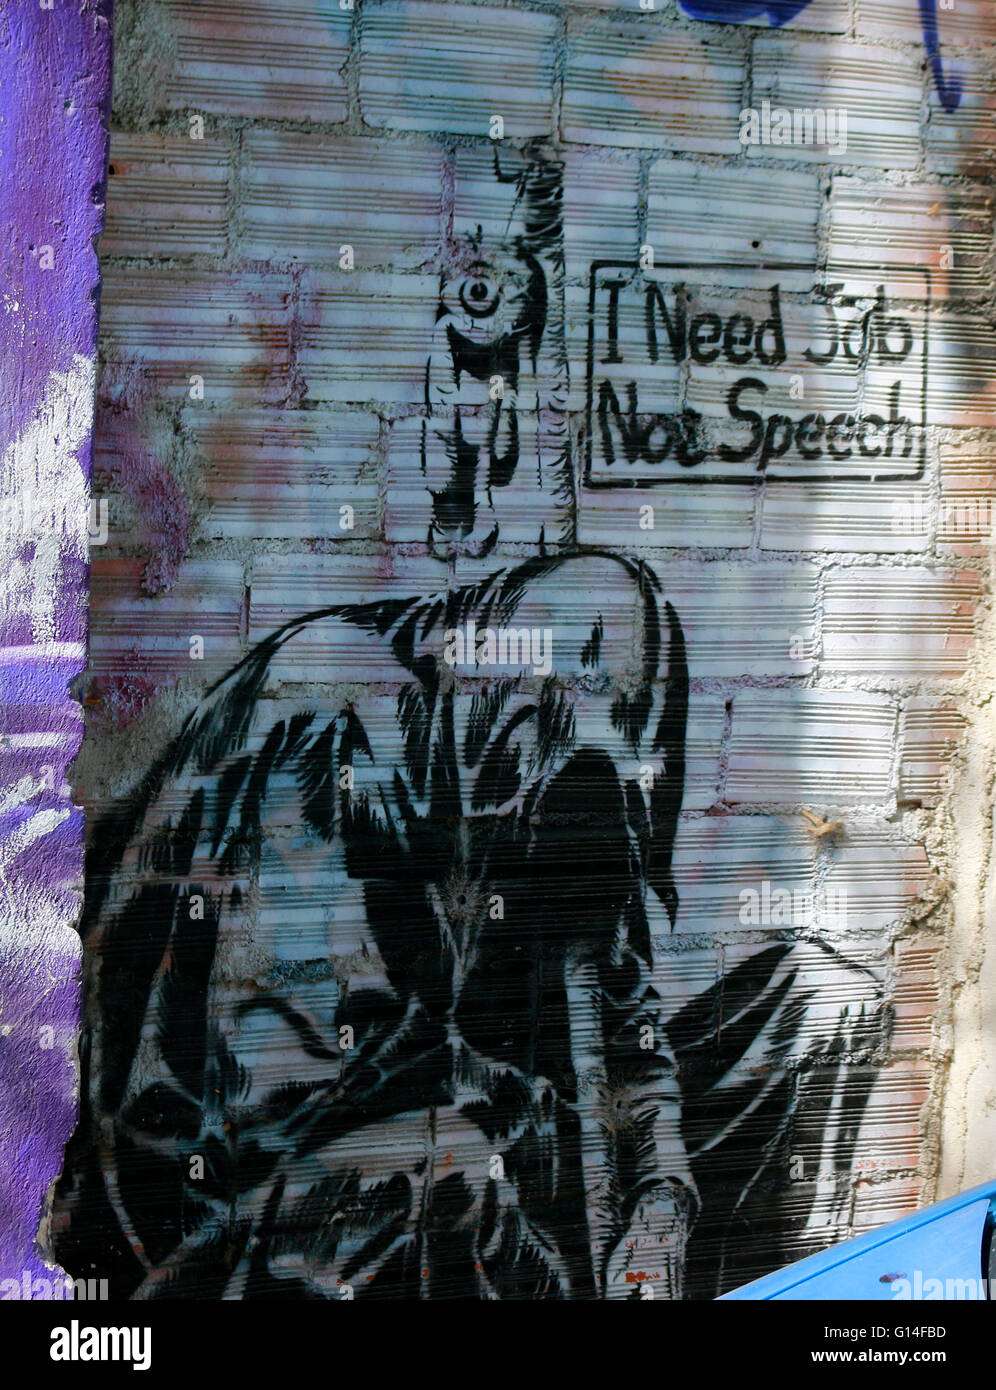 'I need job, not speech' - Graffity - Impressionen, Wirtschaftskrise Griechenland, 5. April 2016, Athen, Griechenland. Stock Photo